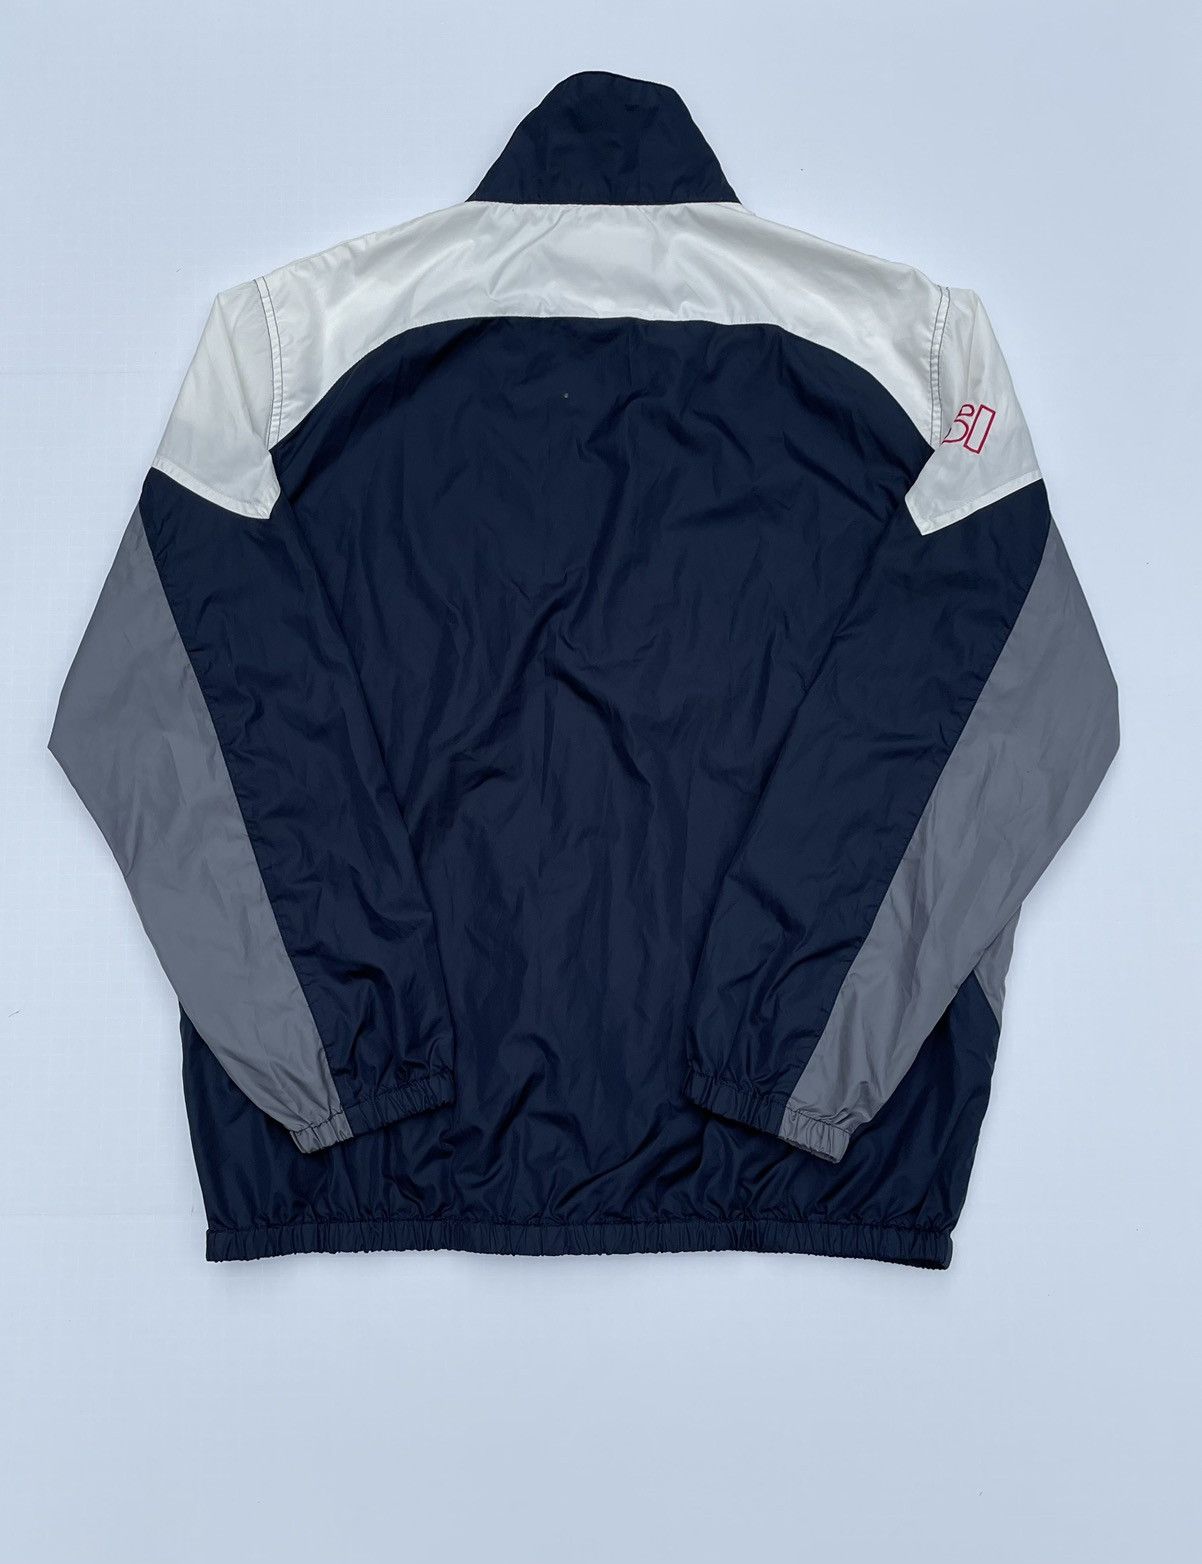 NFL vintage 90s NFL TENNESSEE TITANS windbreaker jacket Size US XL / EU 56 / 4 - 6 Preview